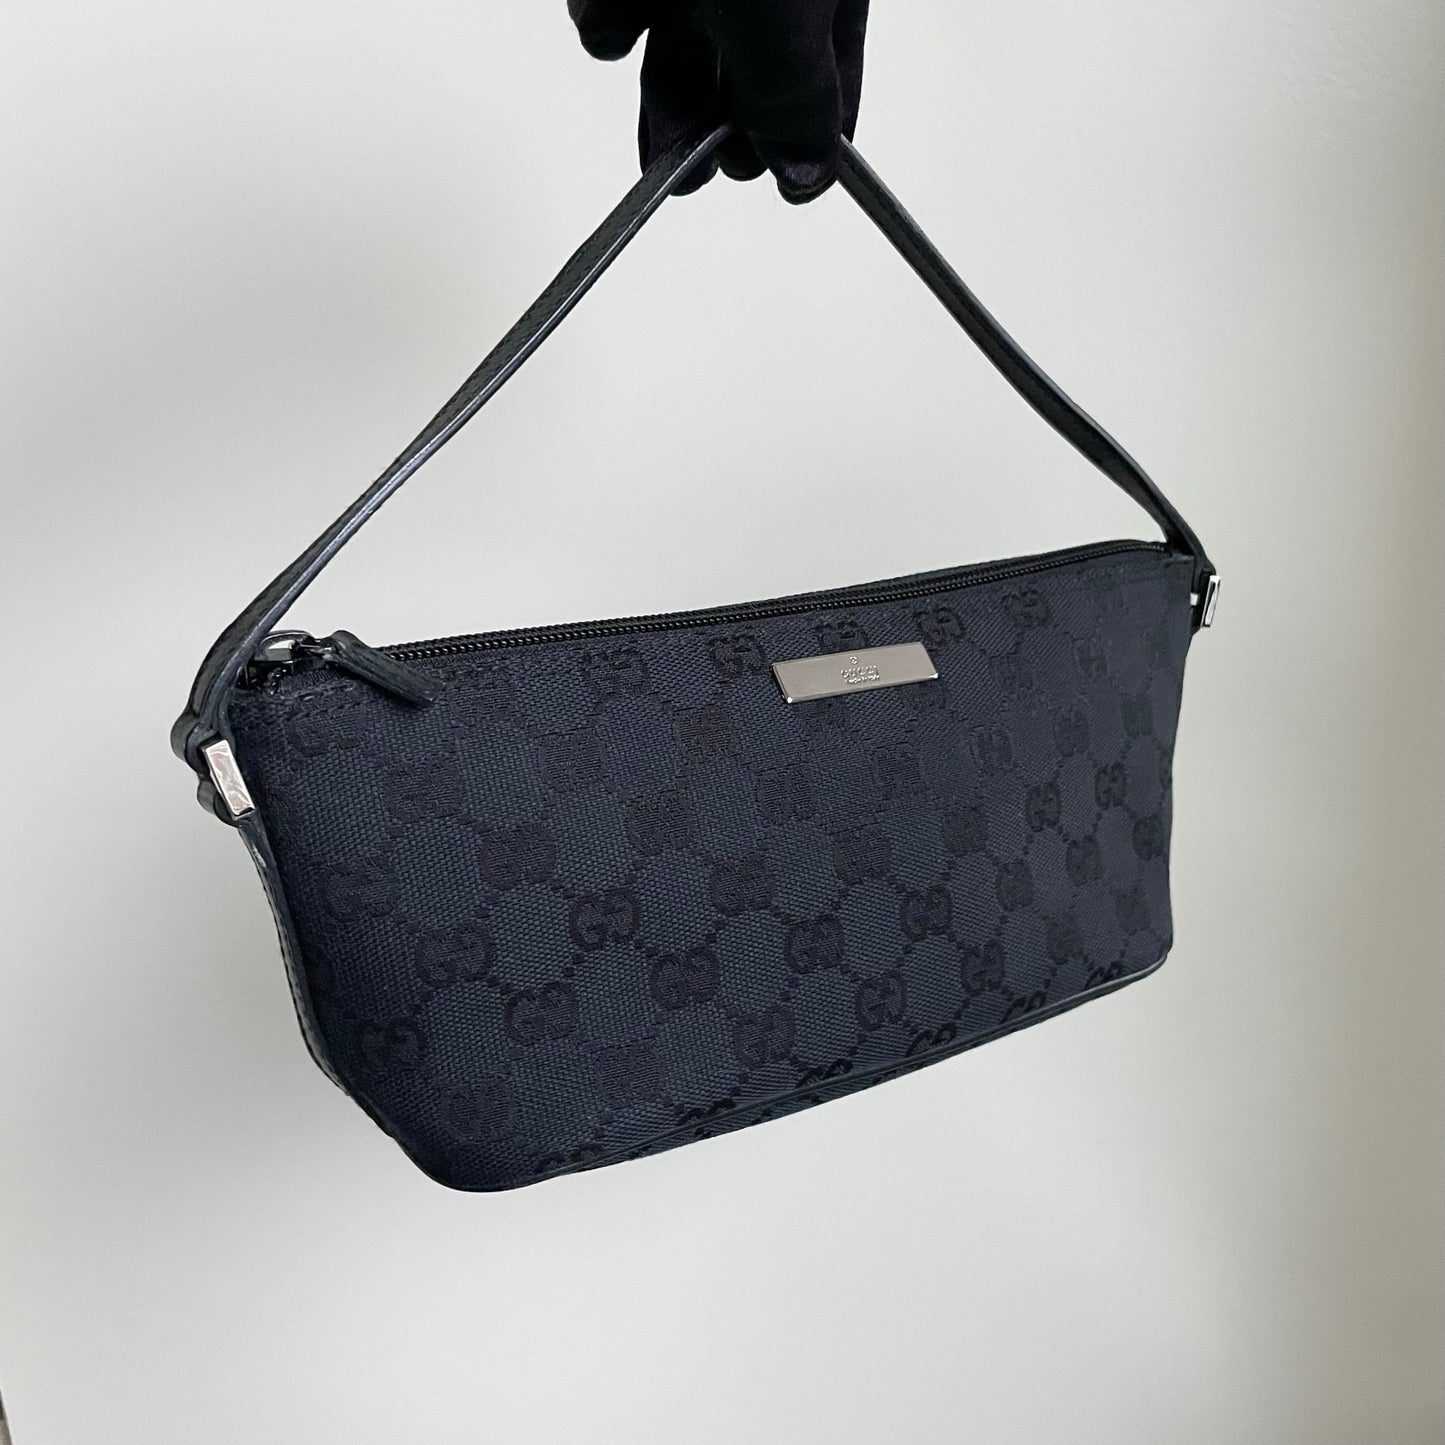 Gucci Boat Pochette  Gucci vintage bag, Bags, Bags designer fashion